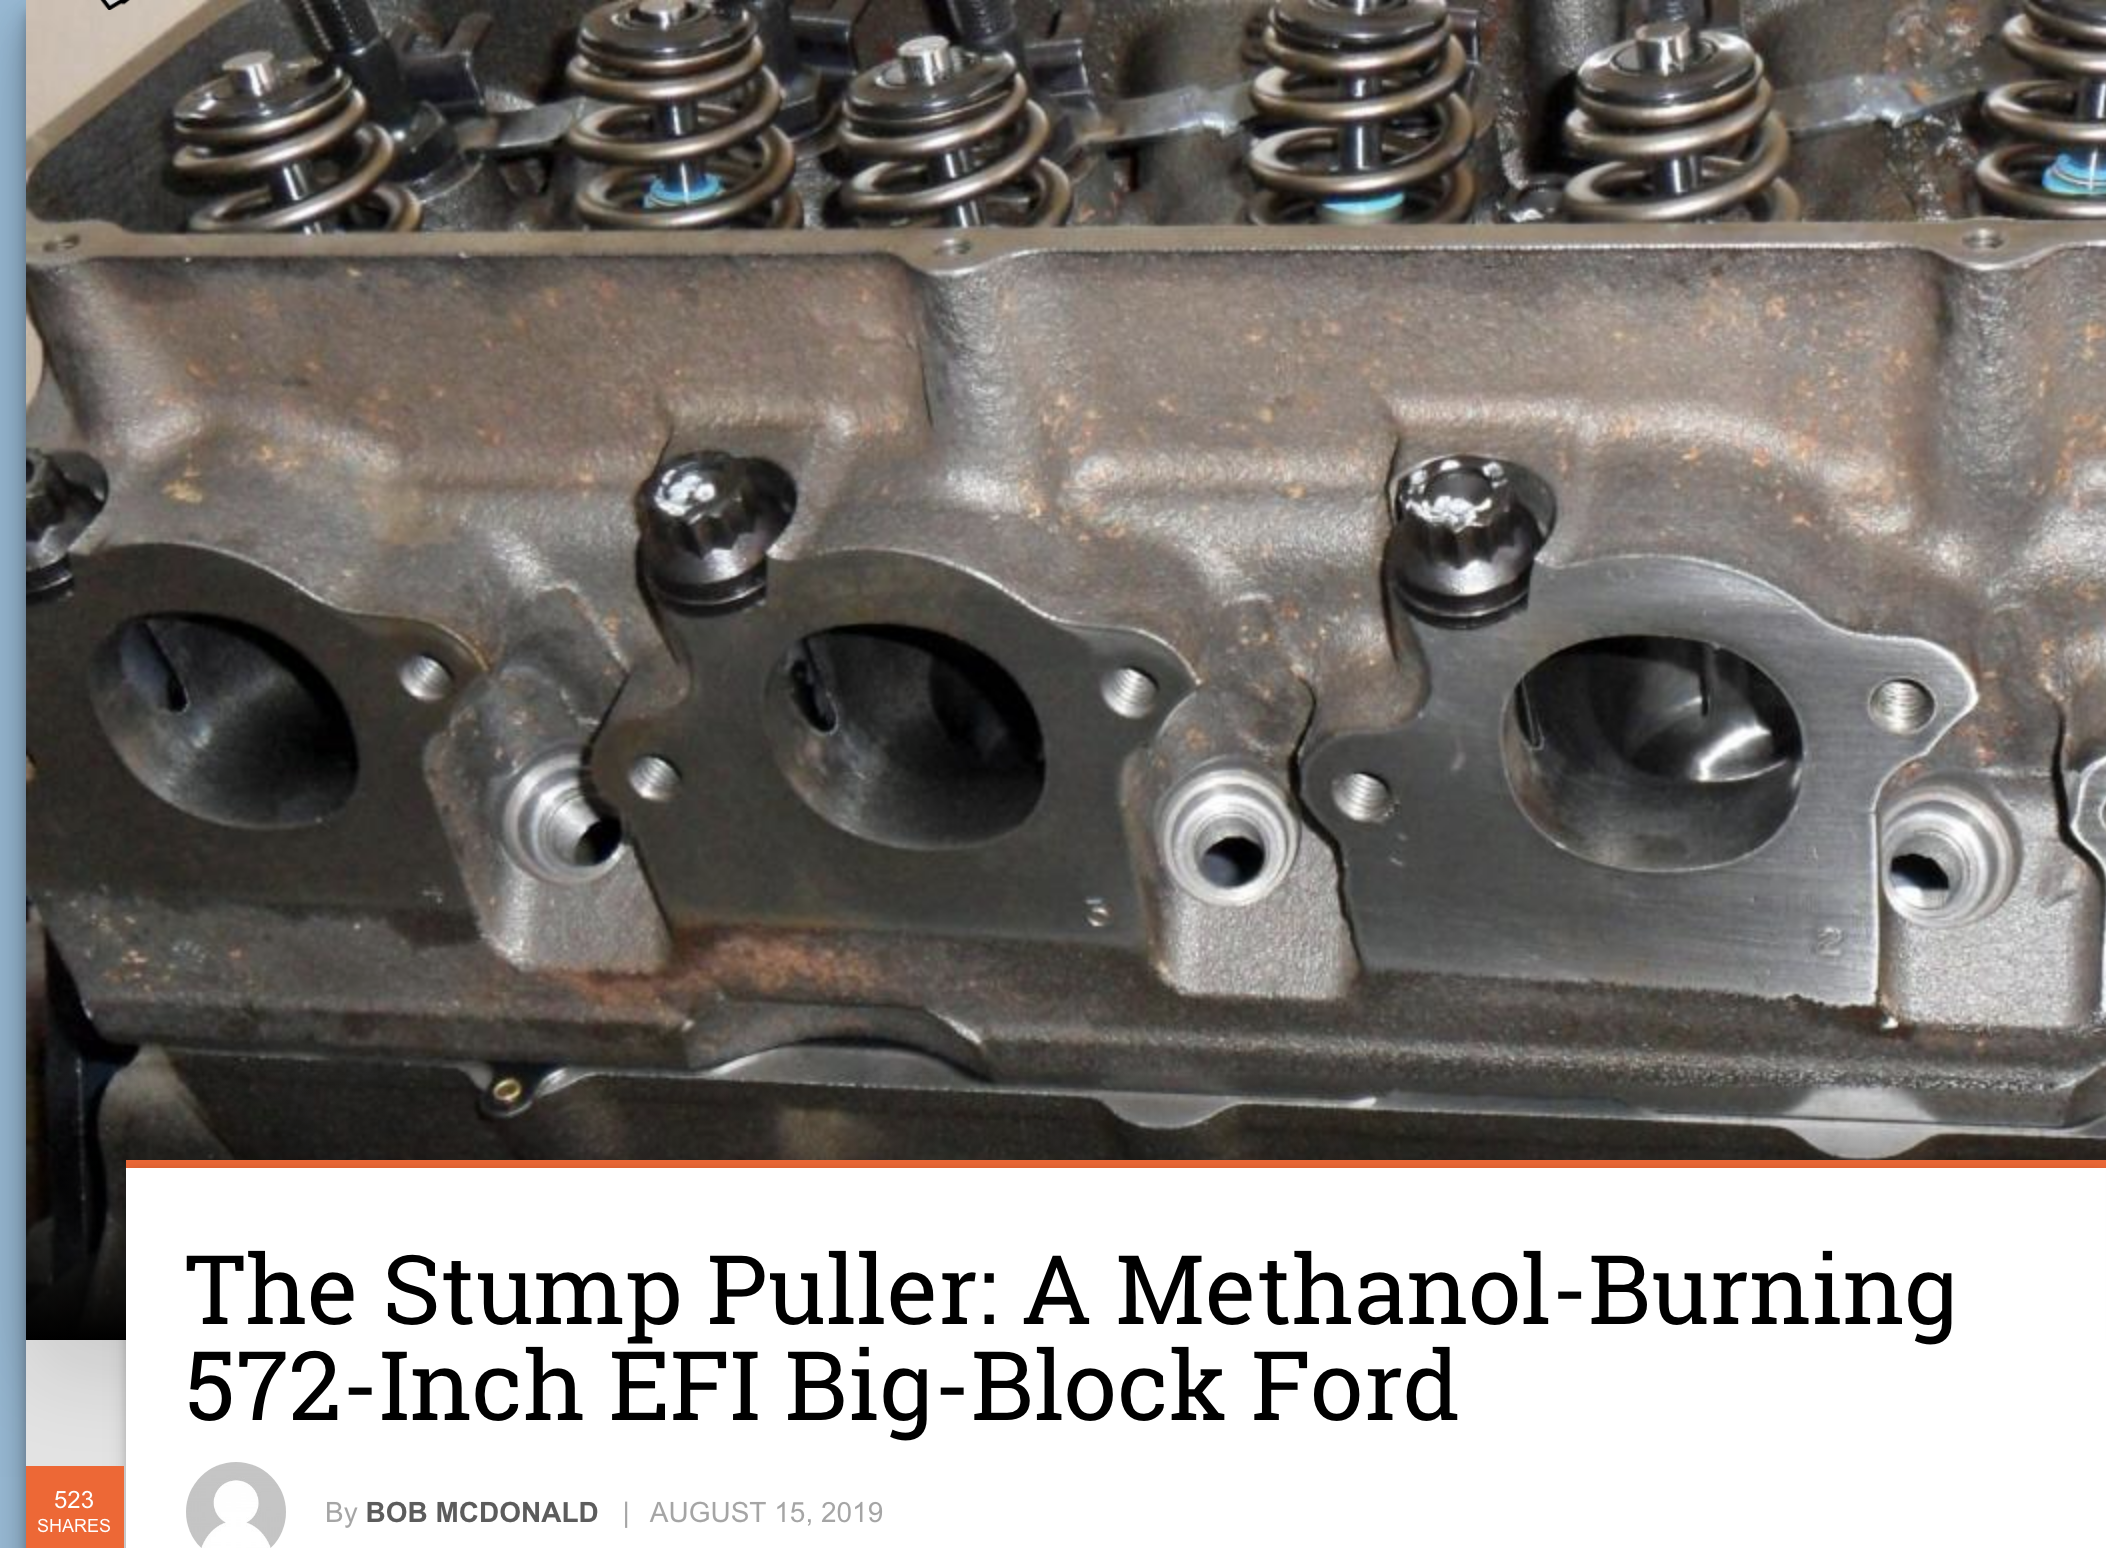 The Stump Puller: A Methanol-Burning 572-Inch EFI Big-Block Ford